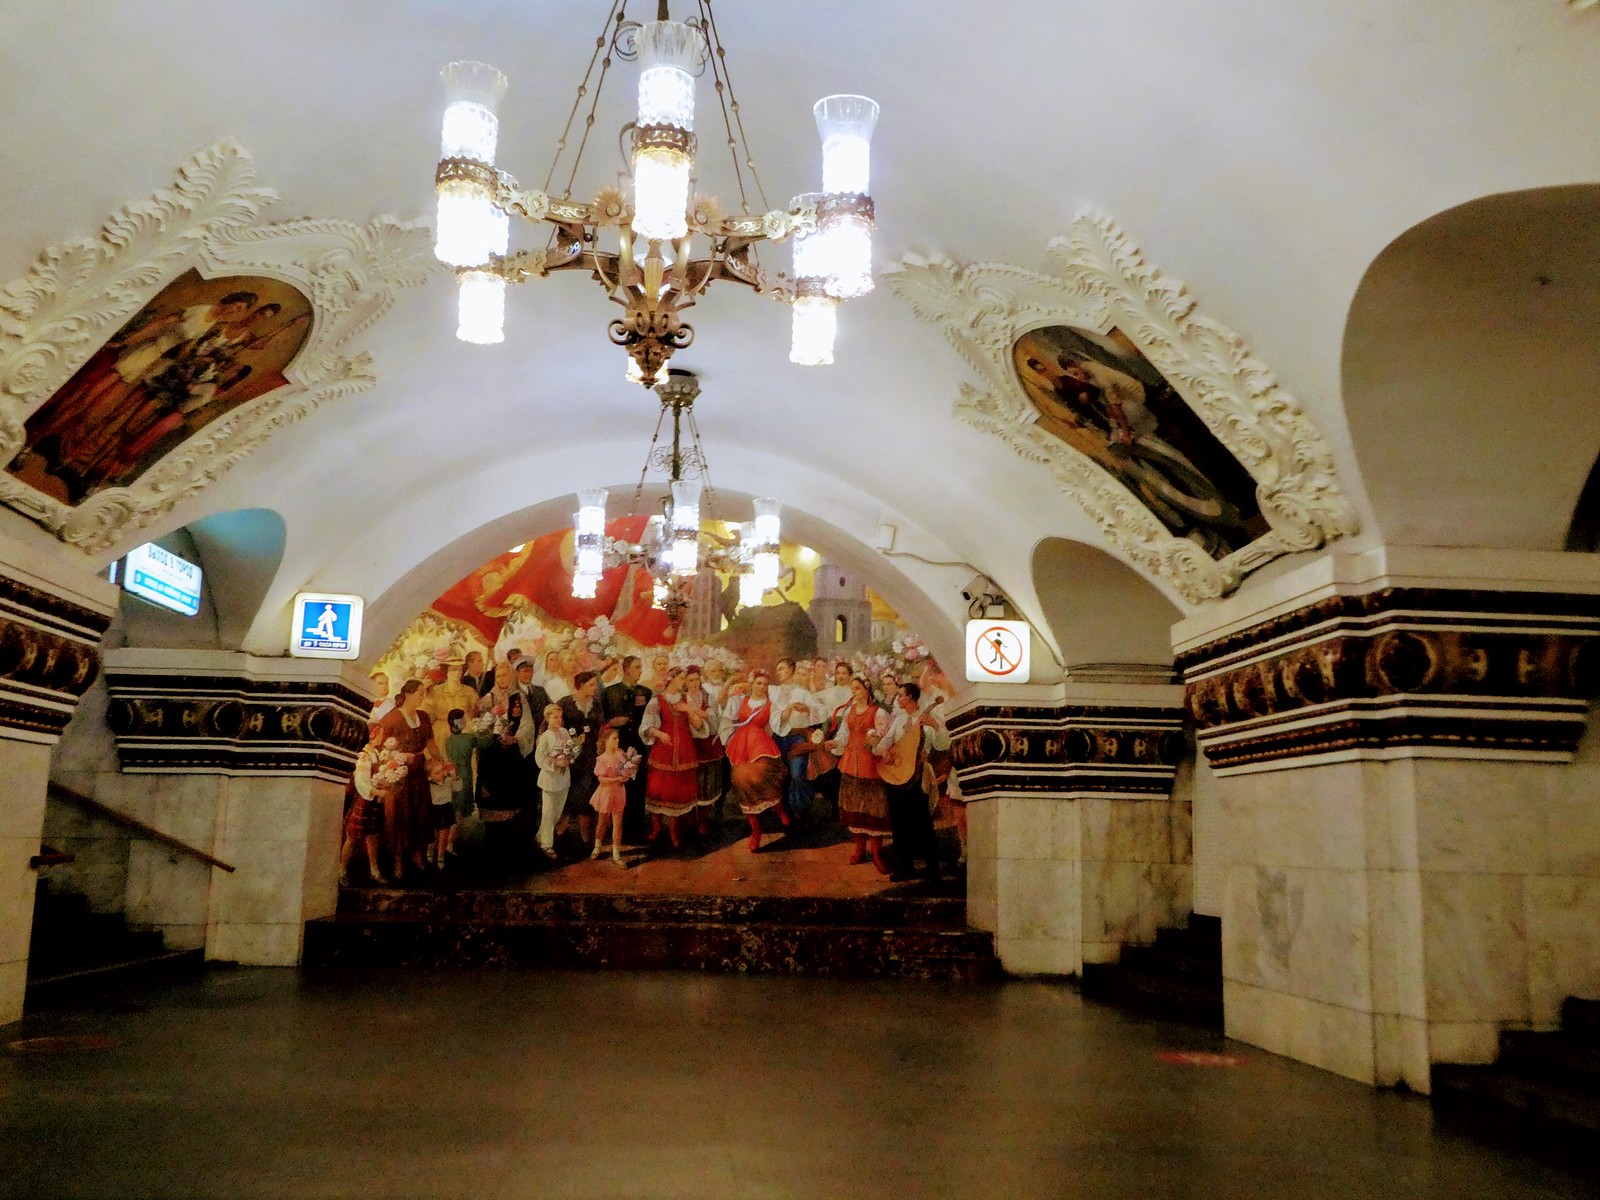 Kievskaya Metro Station, Moscow